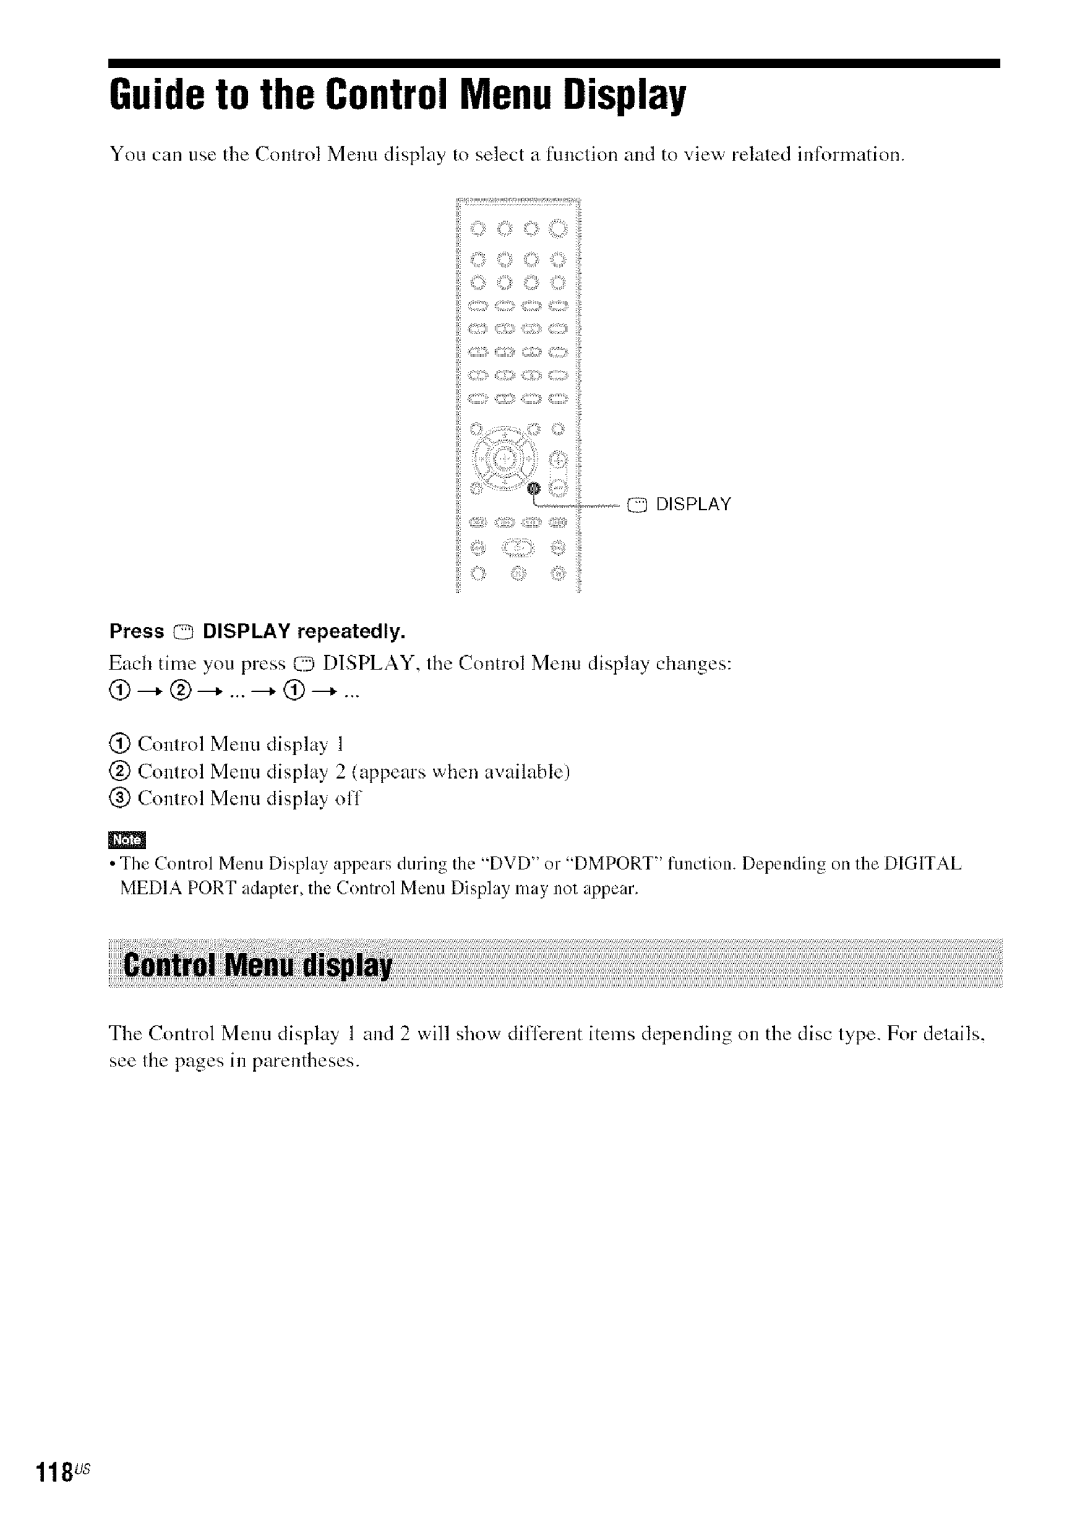 Sony HDX277WC, DAVHDX279W, HDX576WF manual Guideto the Control Menu Display, iiiiii,i:::ii::i,io ¸, > <>, Q, <>> <:>, 118US 